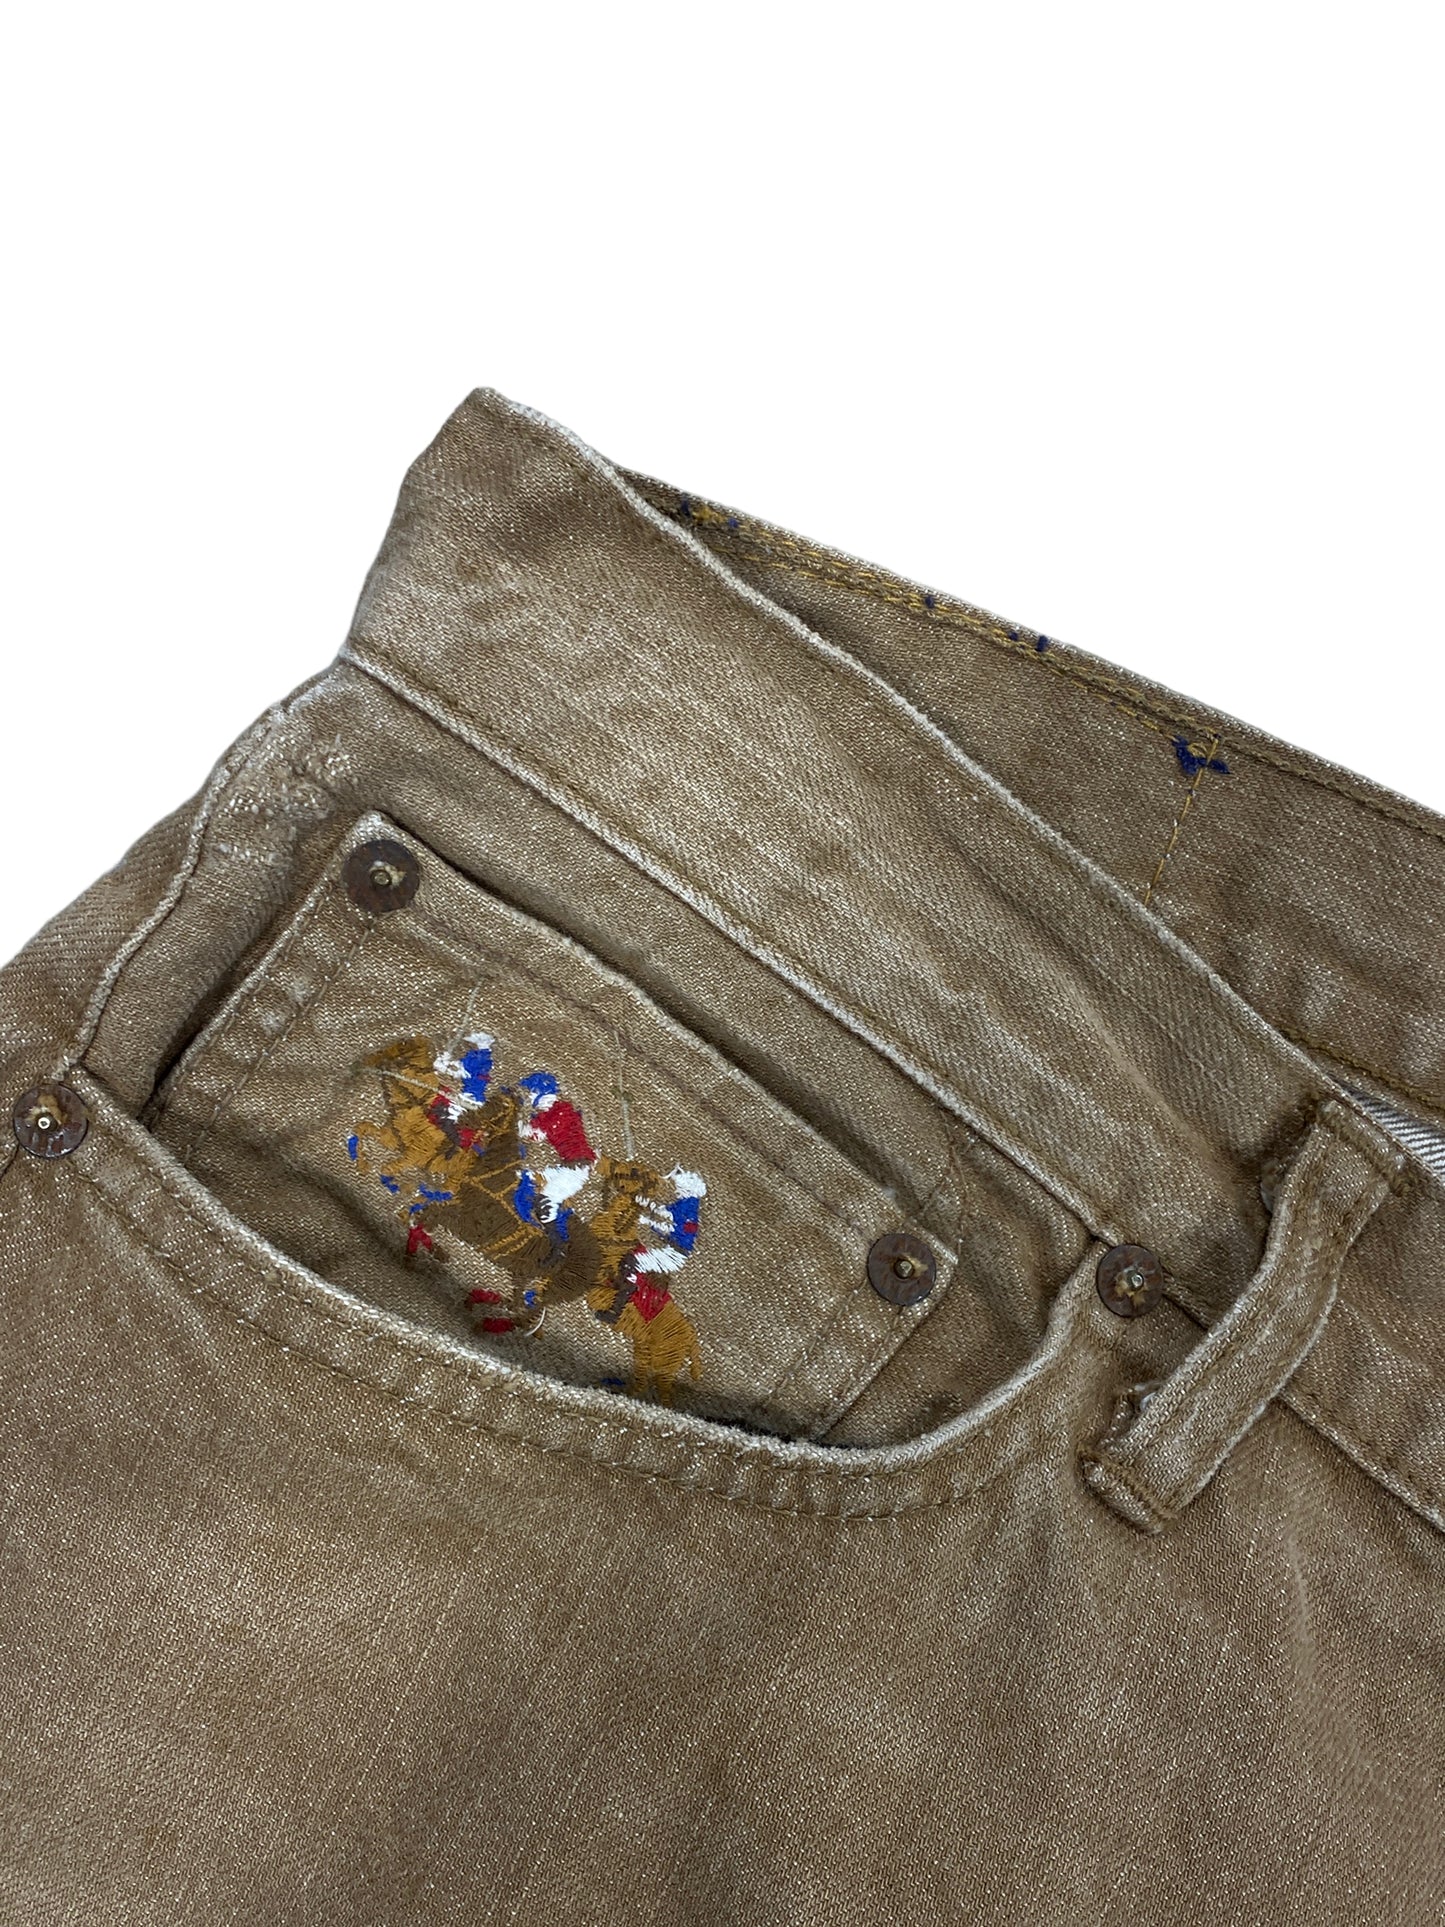 Vintage Polo Ralph Lauren Baxter Embroidered Tan Pants Size 36x32